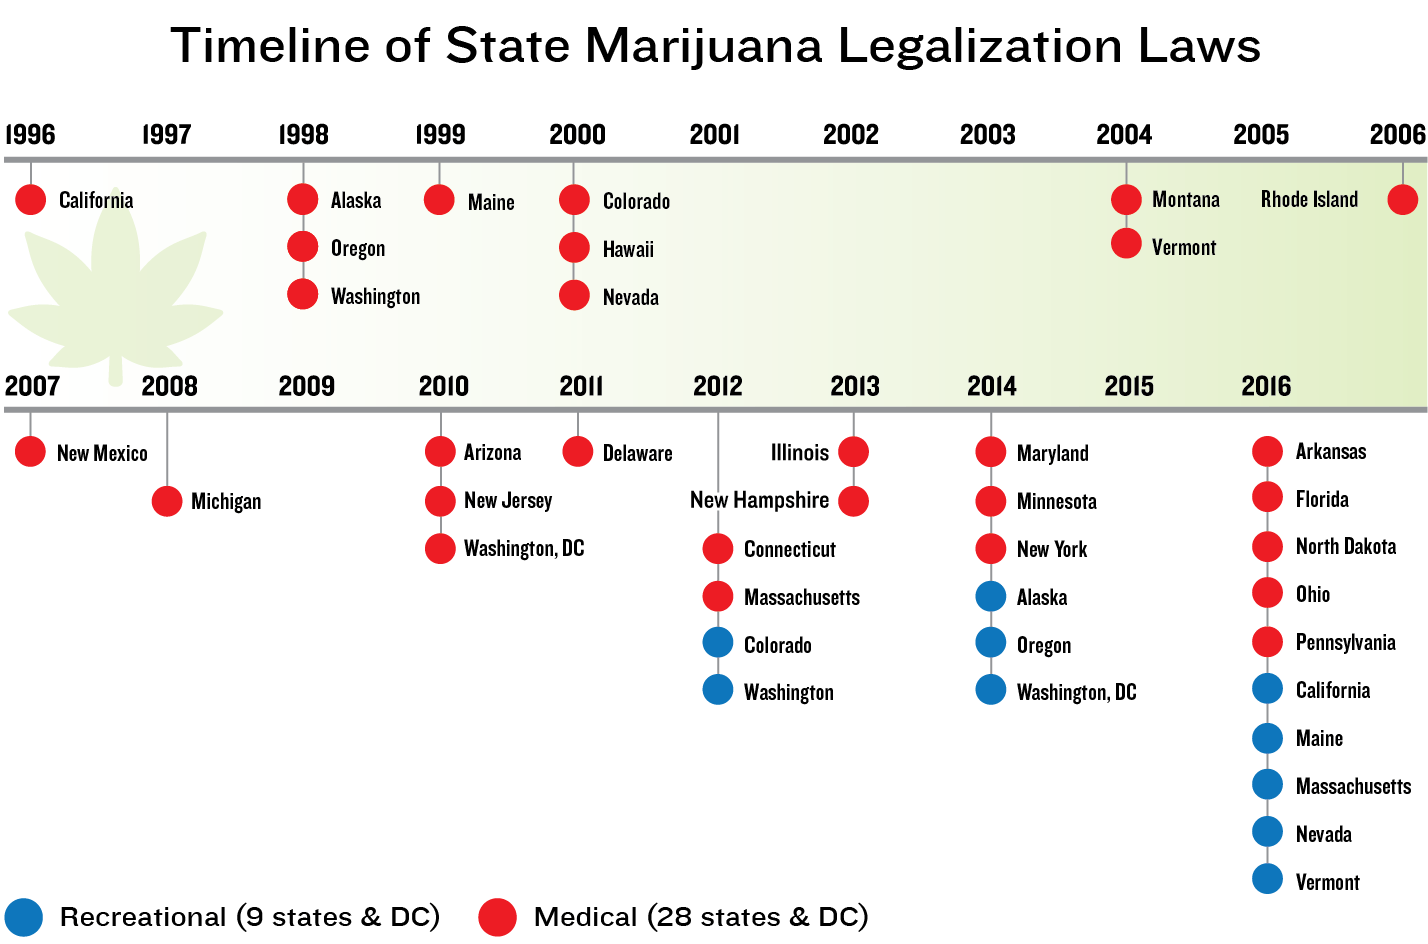 Timeline of state marijuana legalization laws